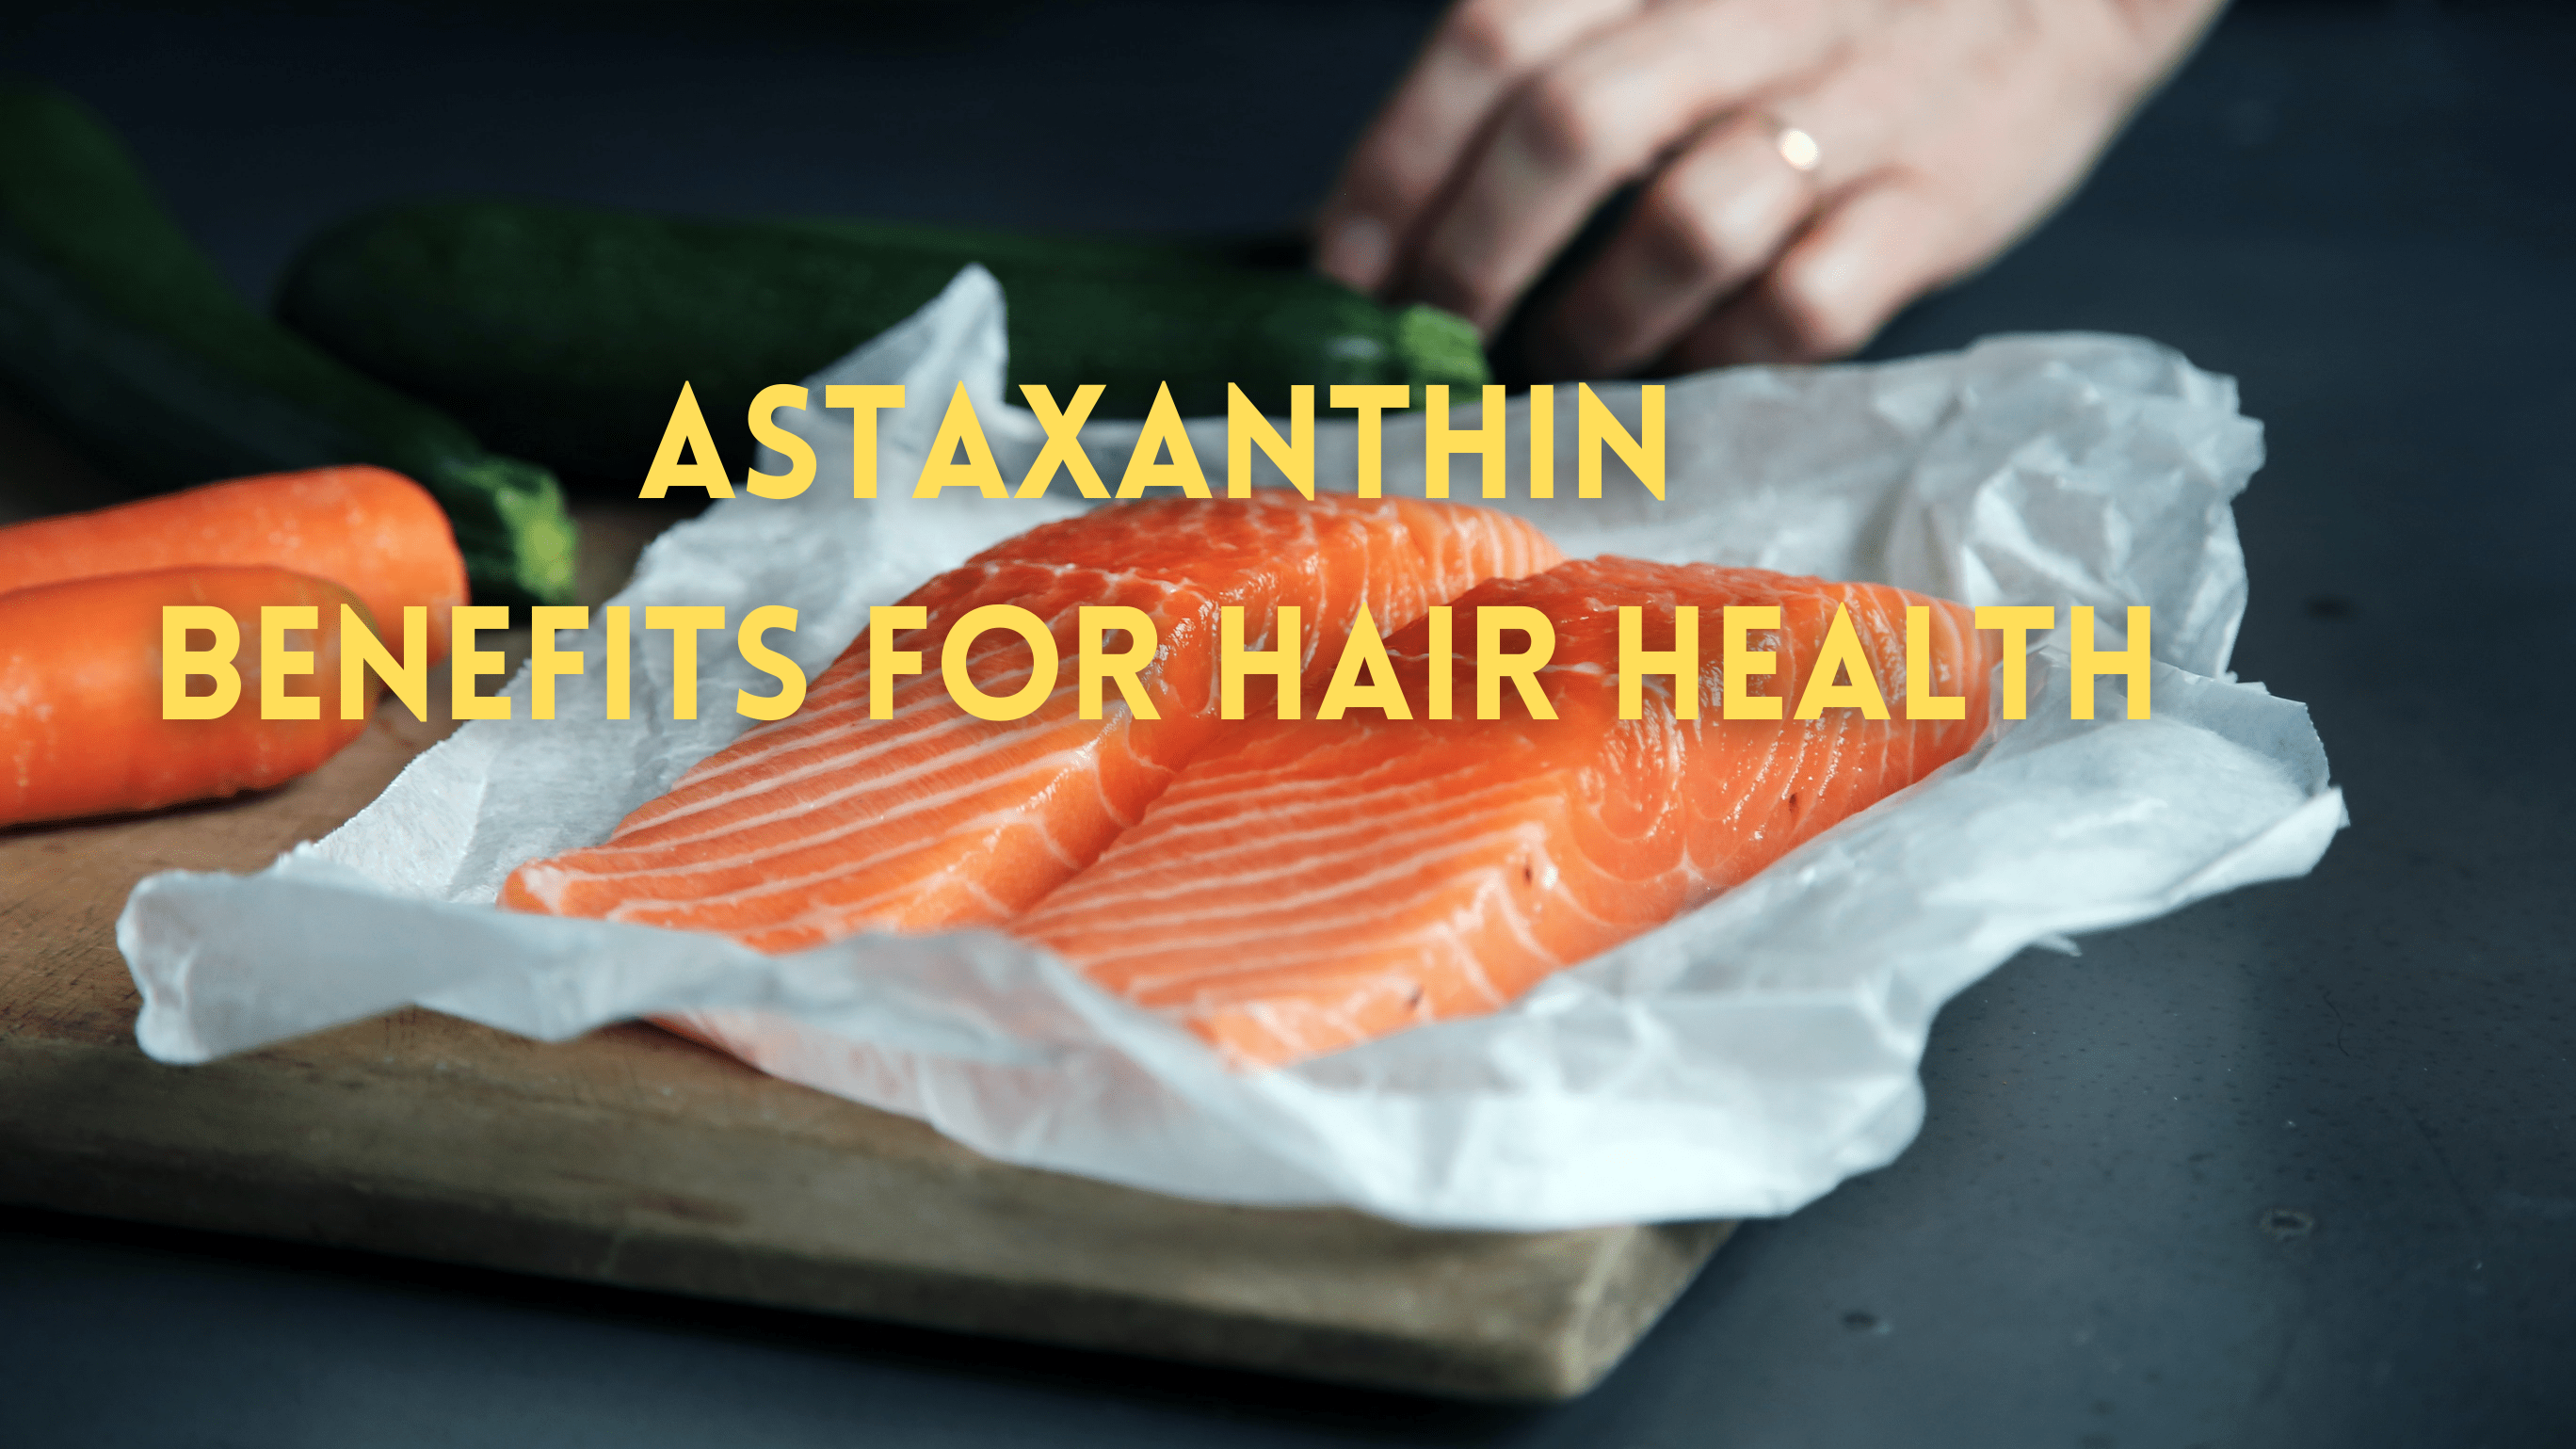 VIDEO: Astaxanthin for Hair Health, Hair Growth: Research & Benefits